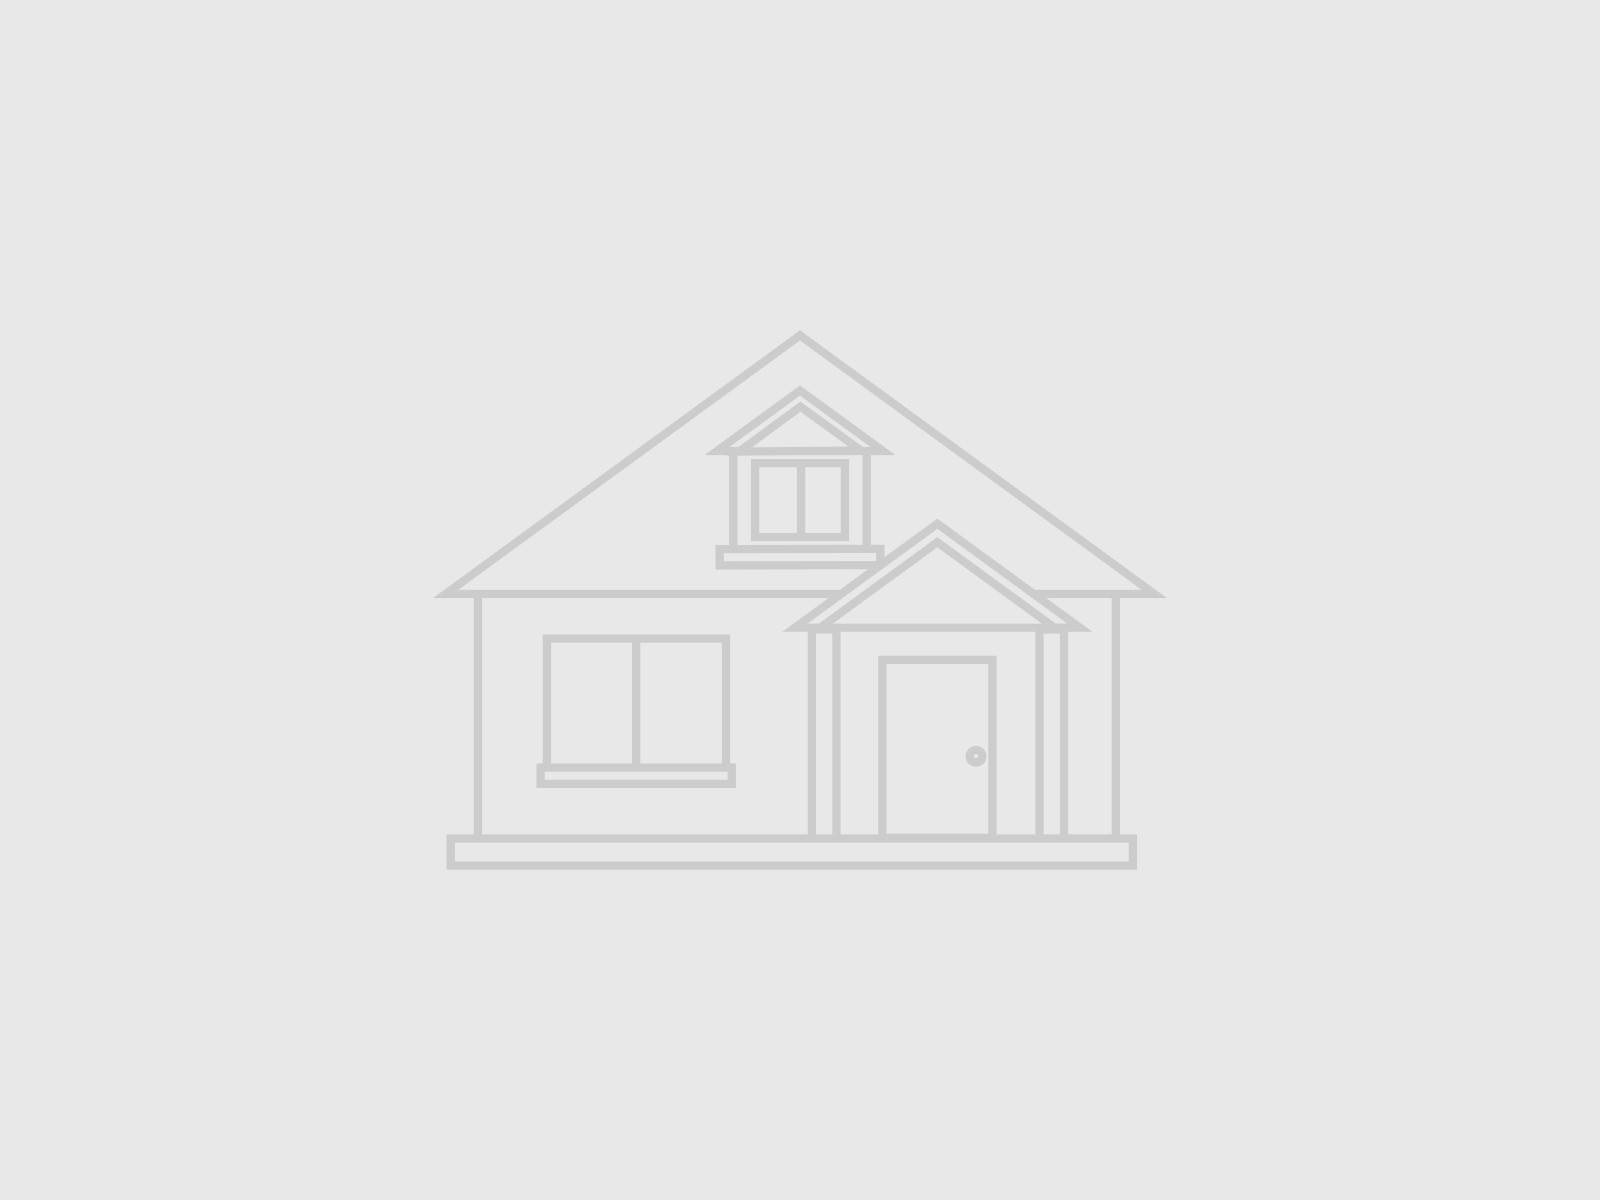 Single Family Homes for Sale at 821 1520 821 1520 Salem, Utah 84653 United States